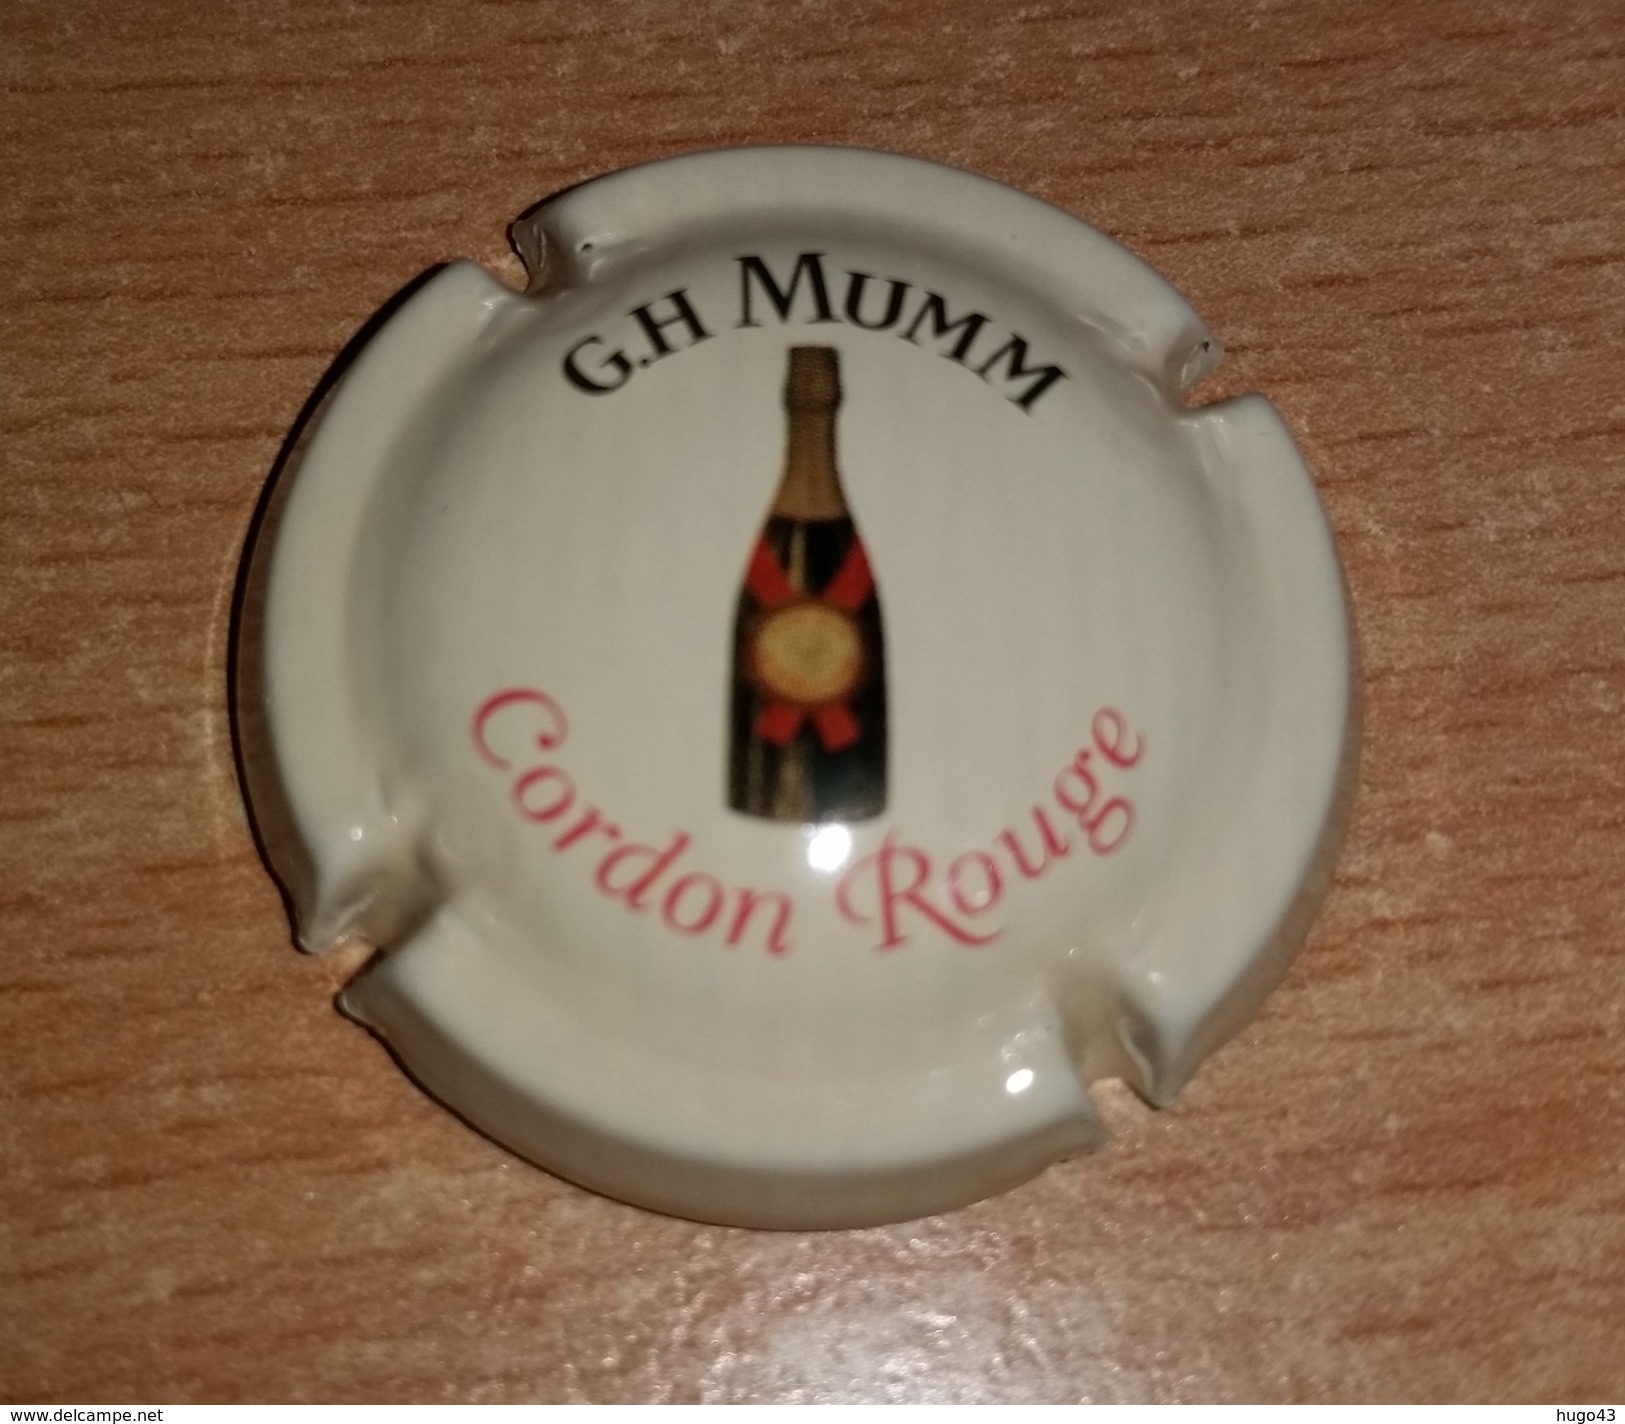 CHAMPAGNE MUMM GH - CORDON ROUGE - Mumm GH